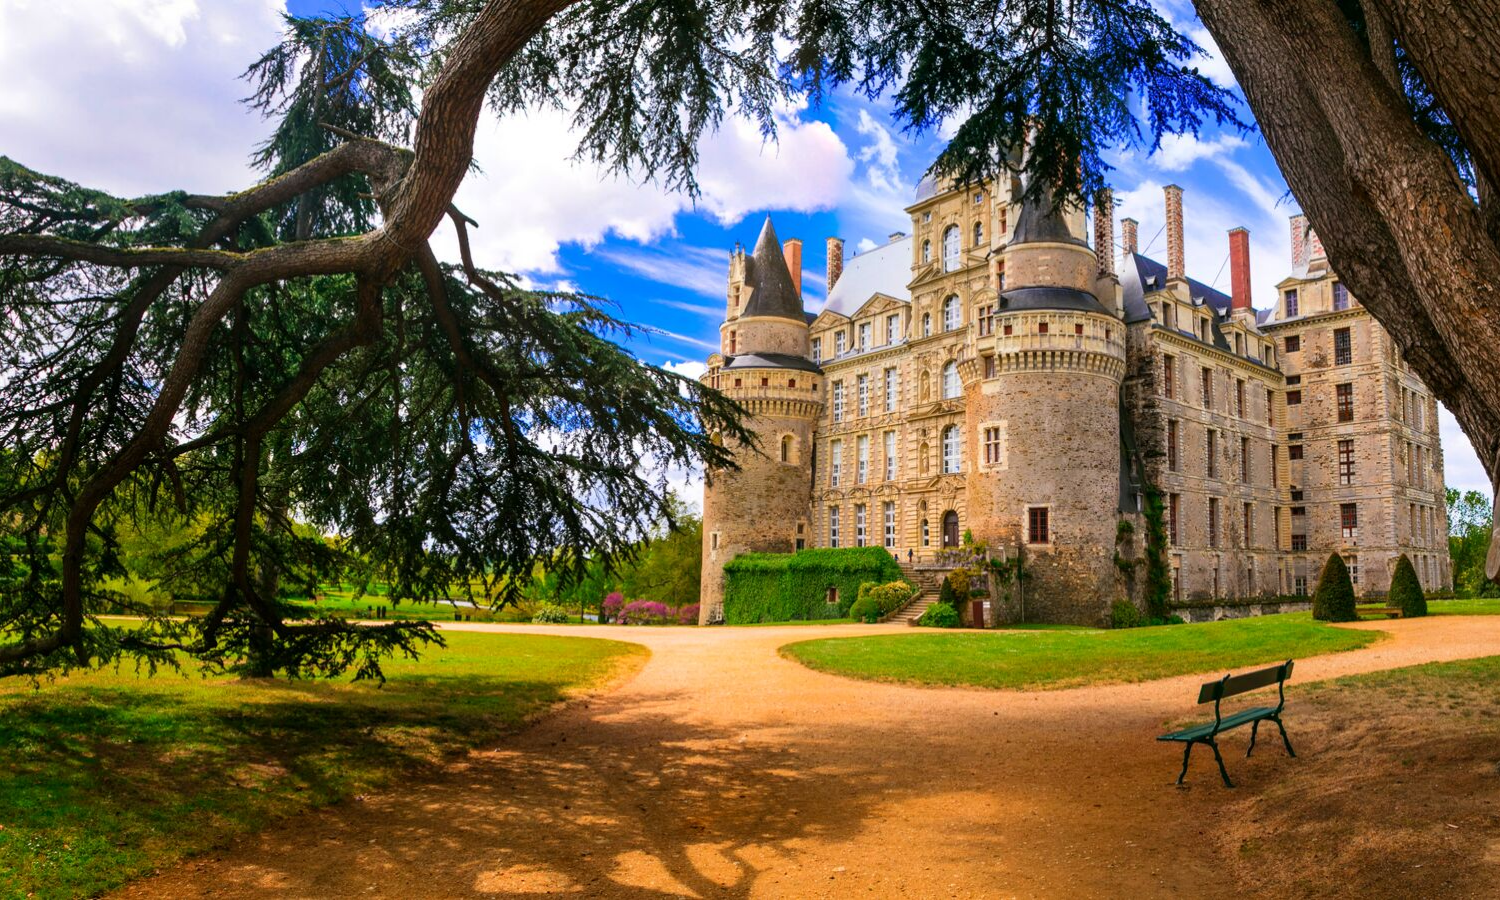 Chateau de Brissac
